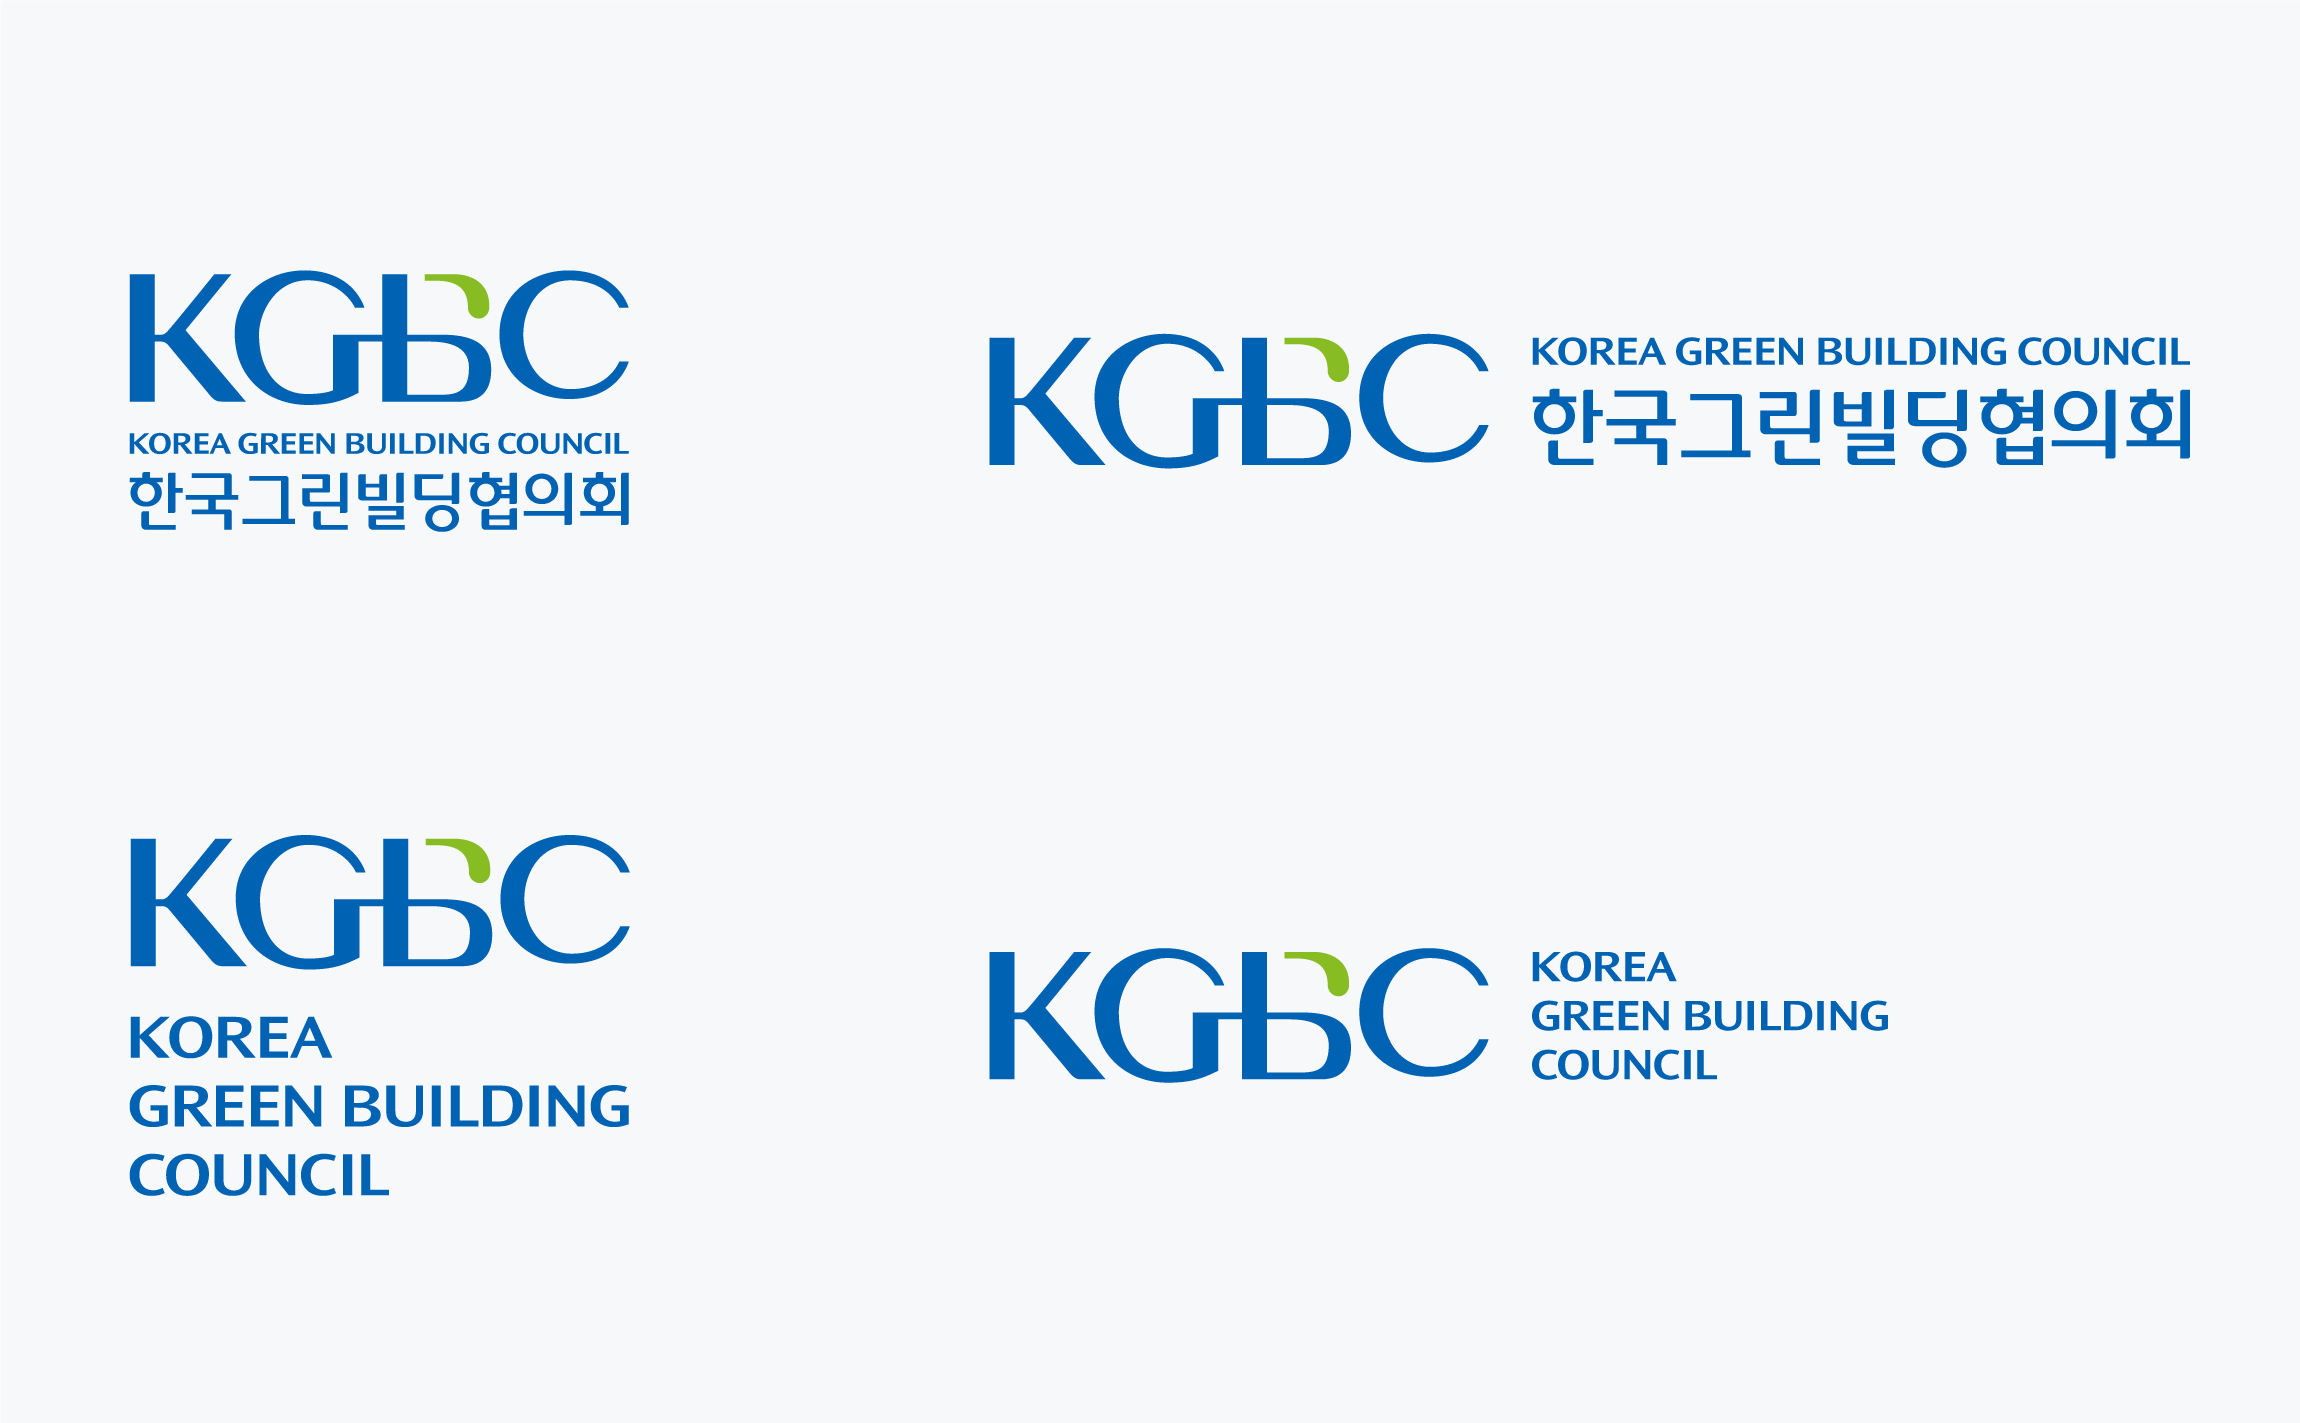 CI system for KGBC 한국그린빌딩협의회 로고, 마크, CI, 브랜드 kgbc-ci-1-1.png